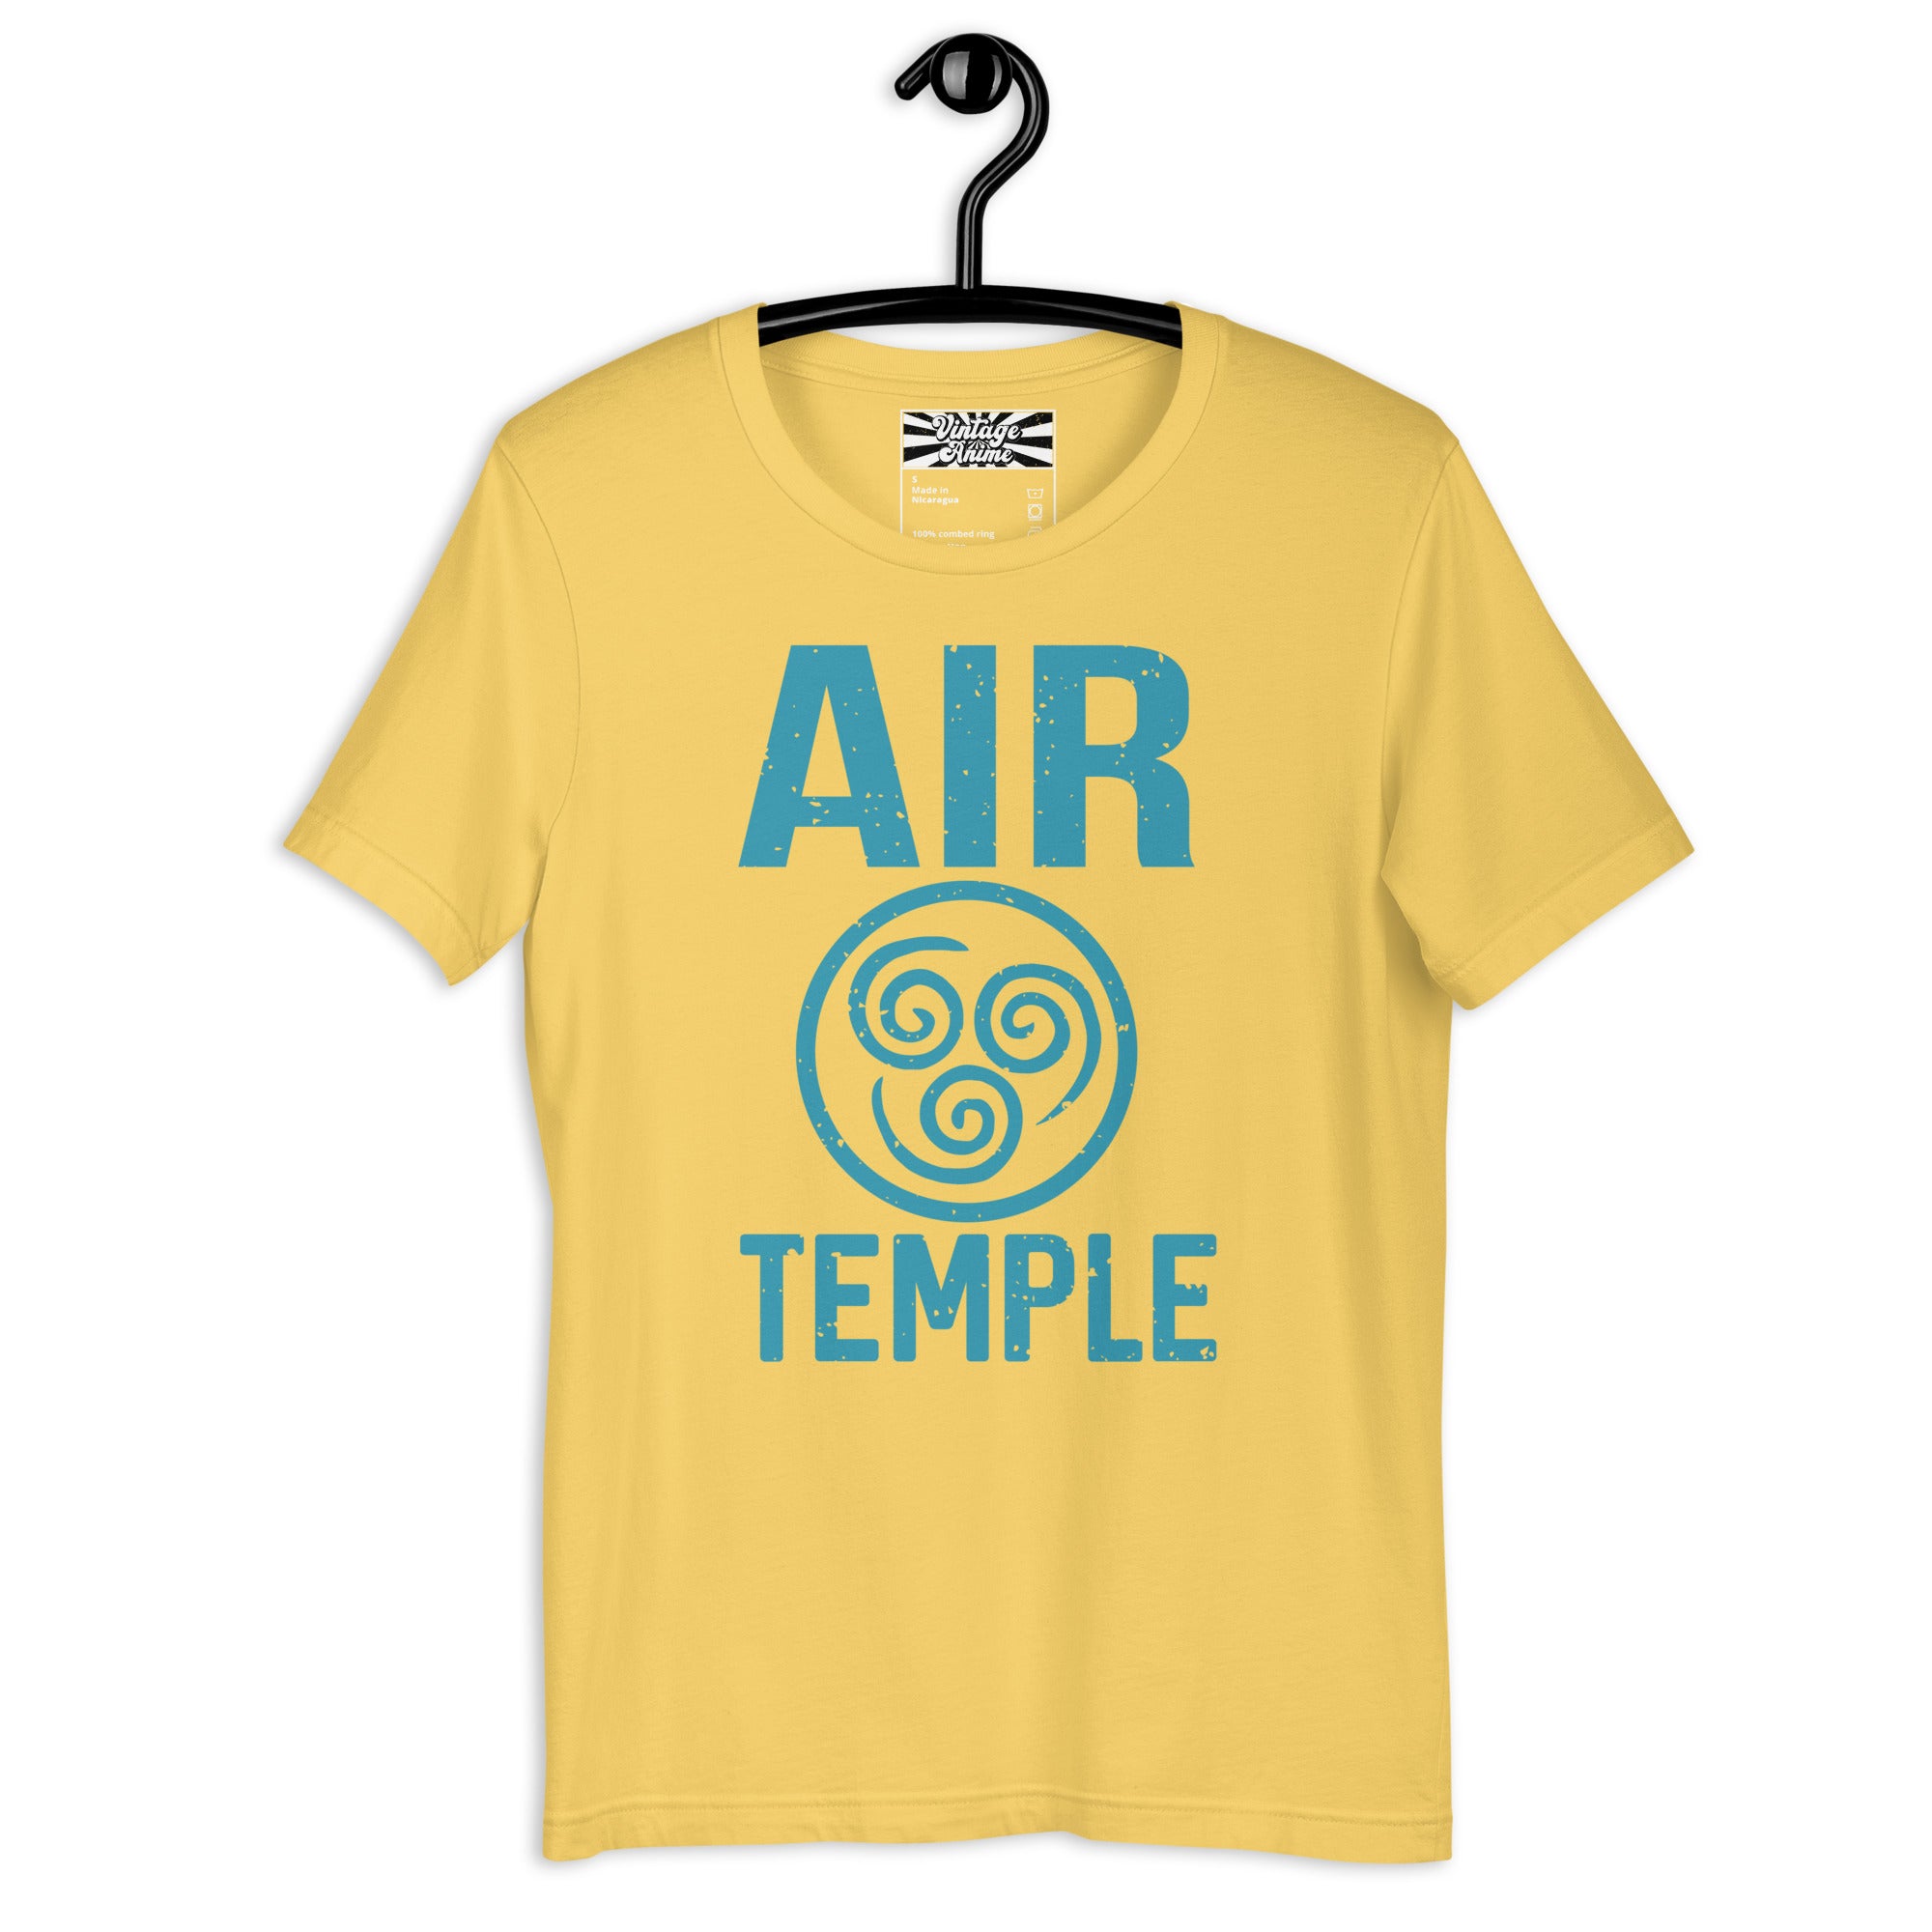 Airbender Air Temple Avatar Unisex T-Shirt for Men